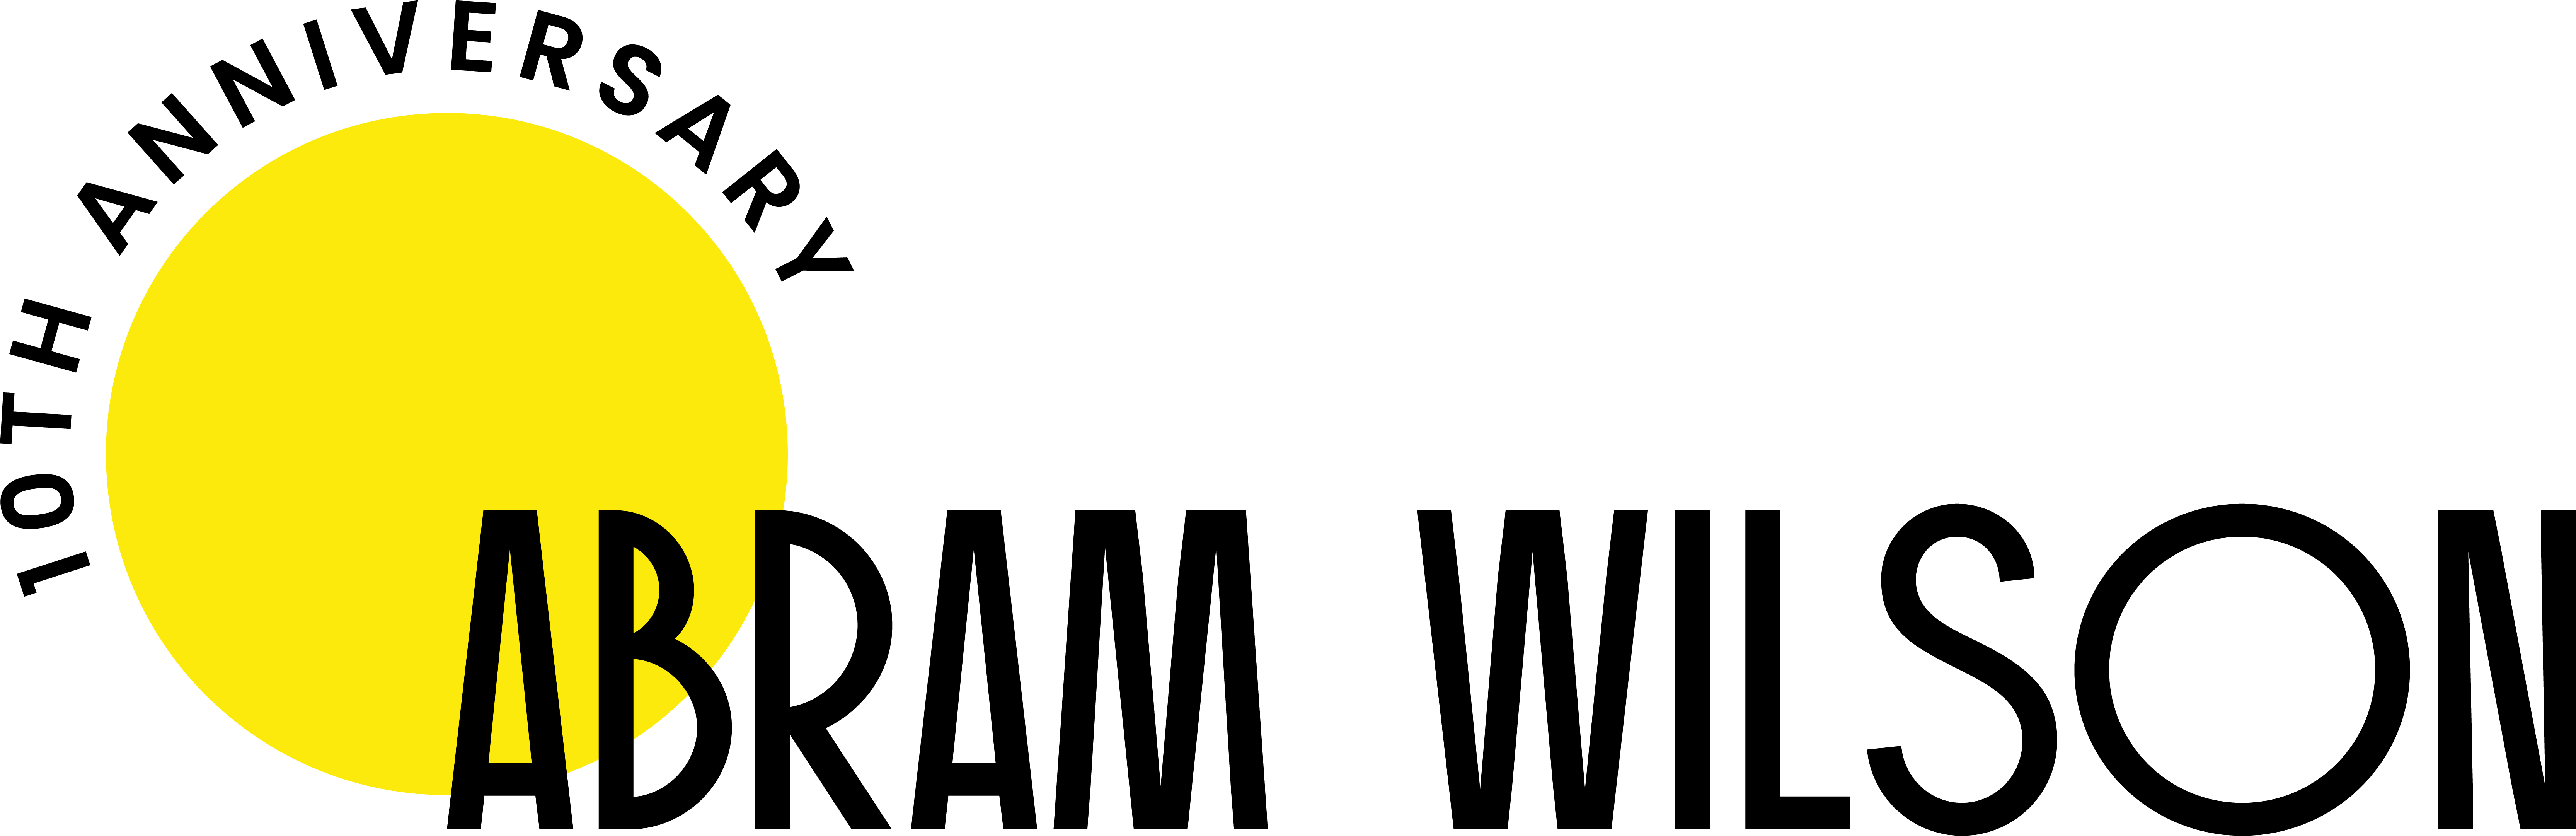 Abram Wilson logo